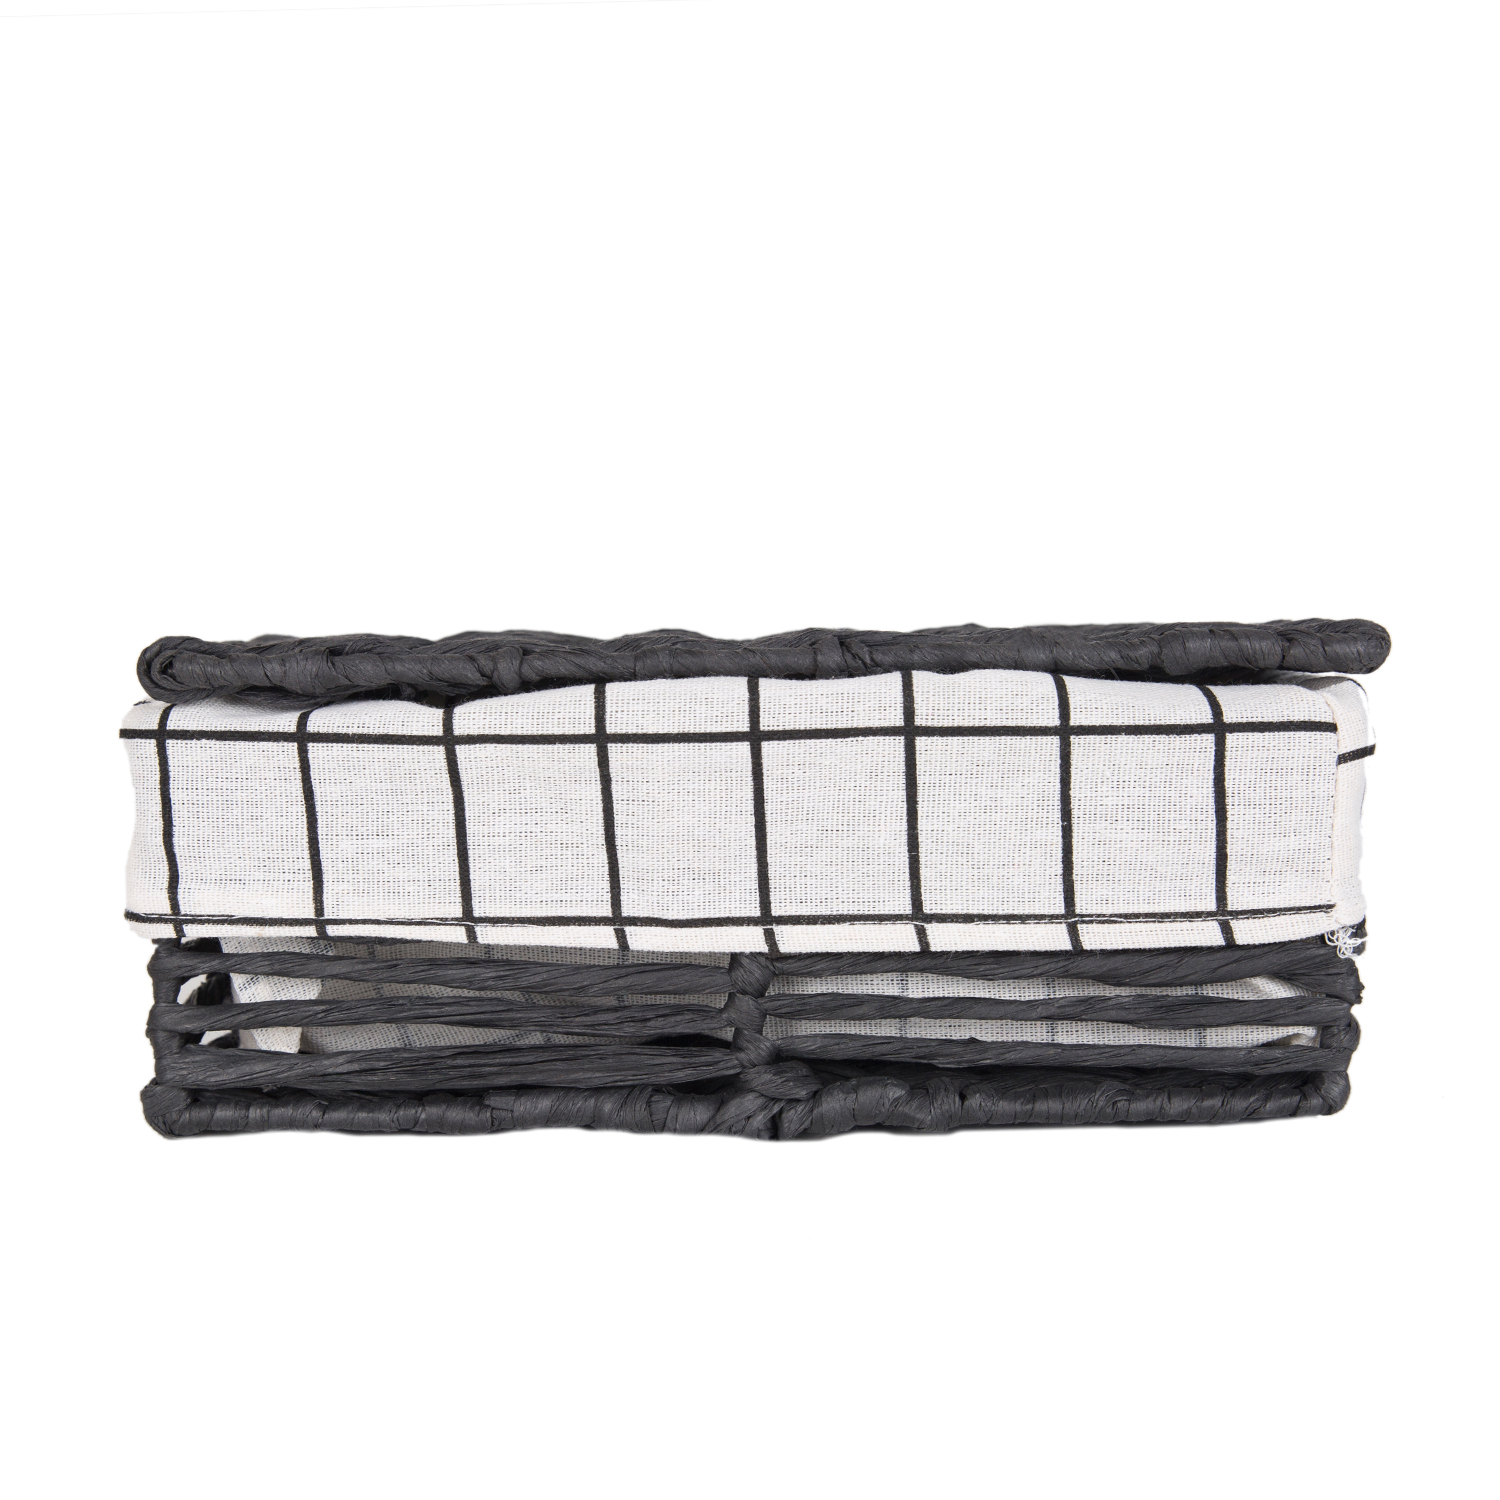 Dikdörtgen Kapaklı Hasır Sepet (Beyaz Kare Kumaş İçli) Siyah 26 X 10,5 X 15 Cm